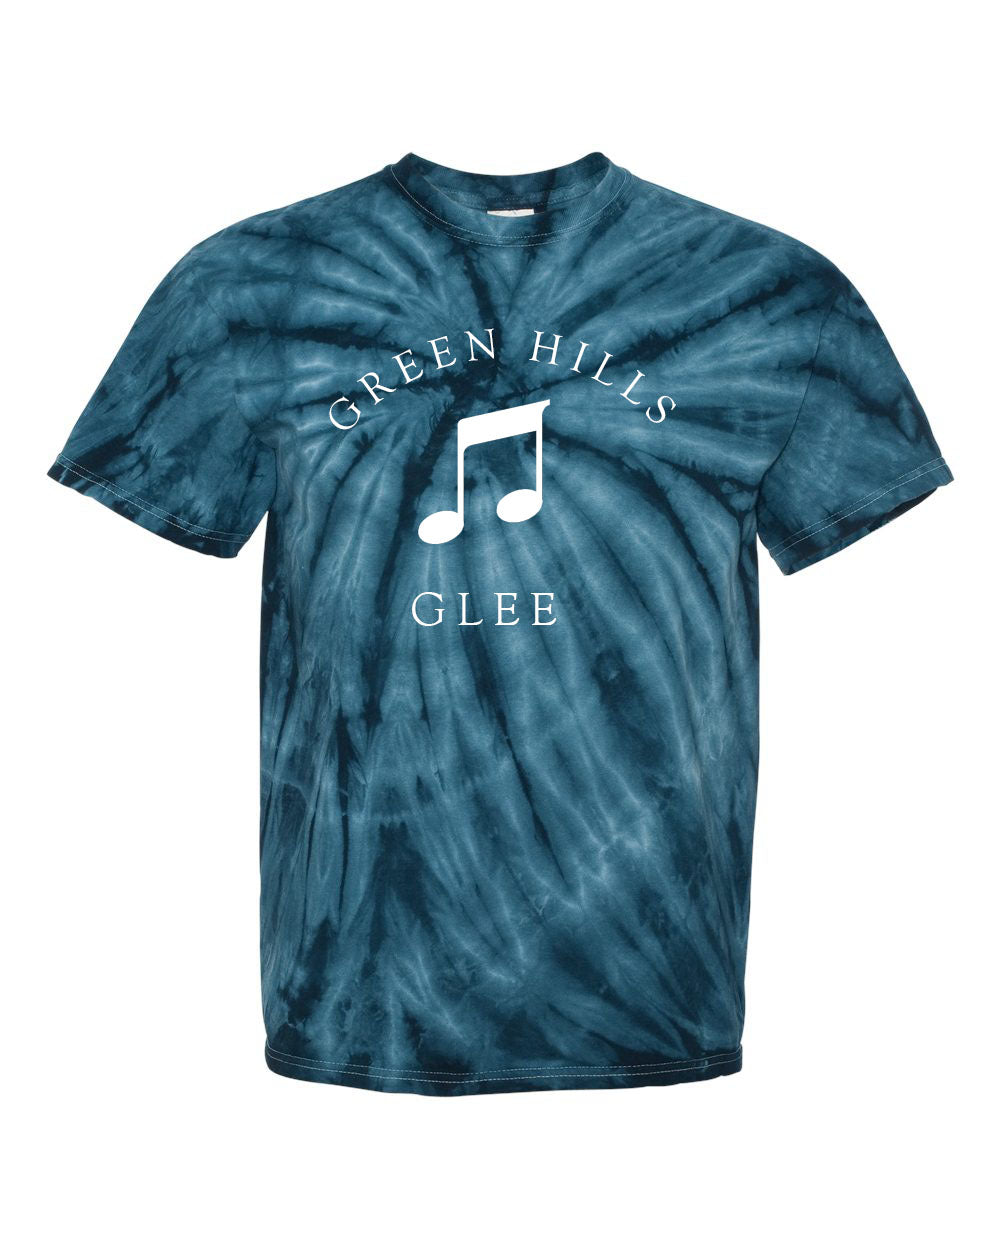 Green Hills Design 10 Tie Dye t-shirt